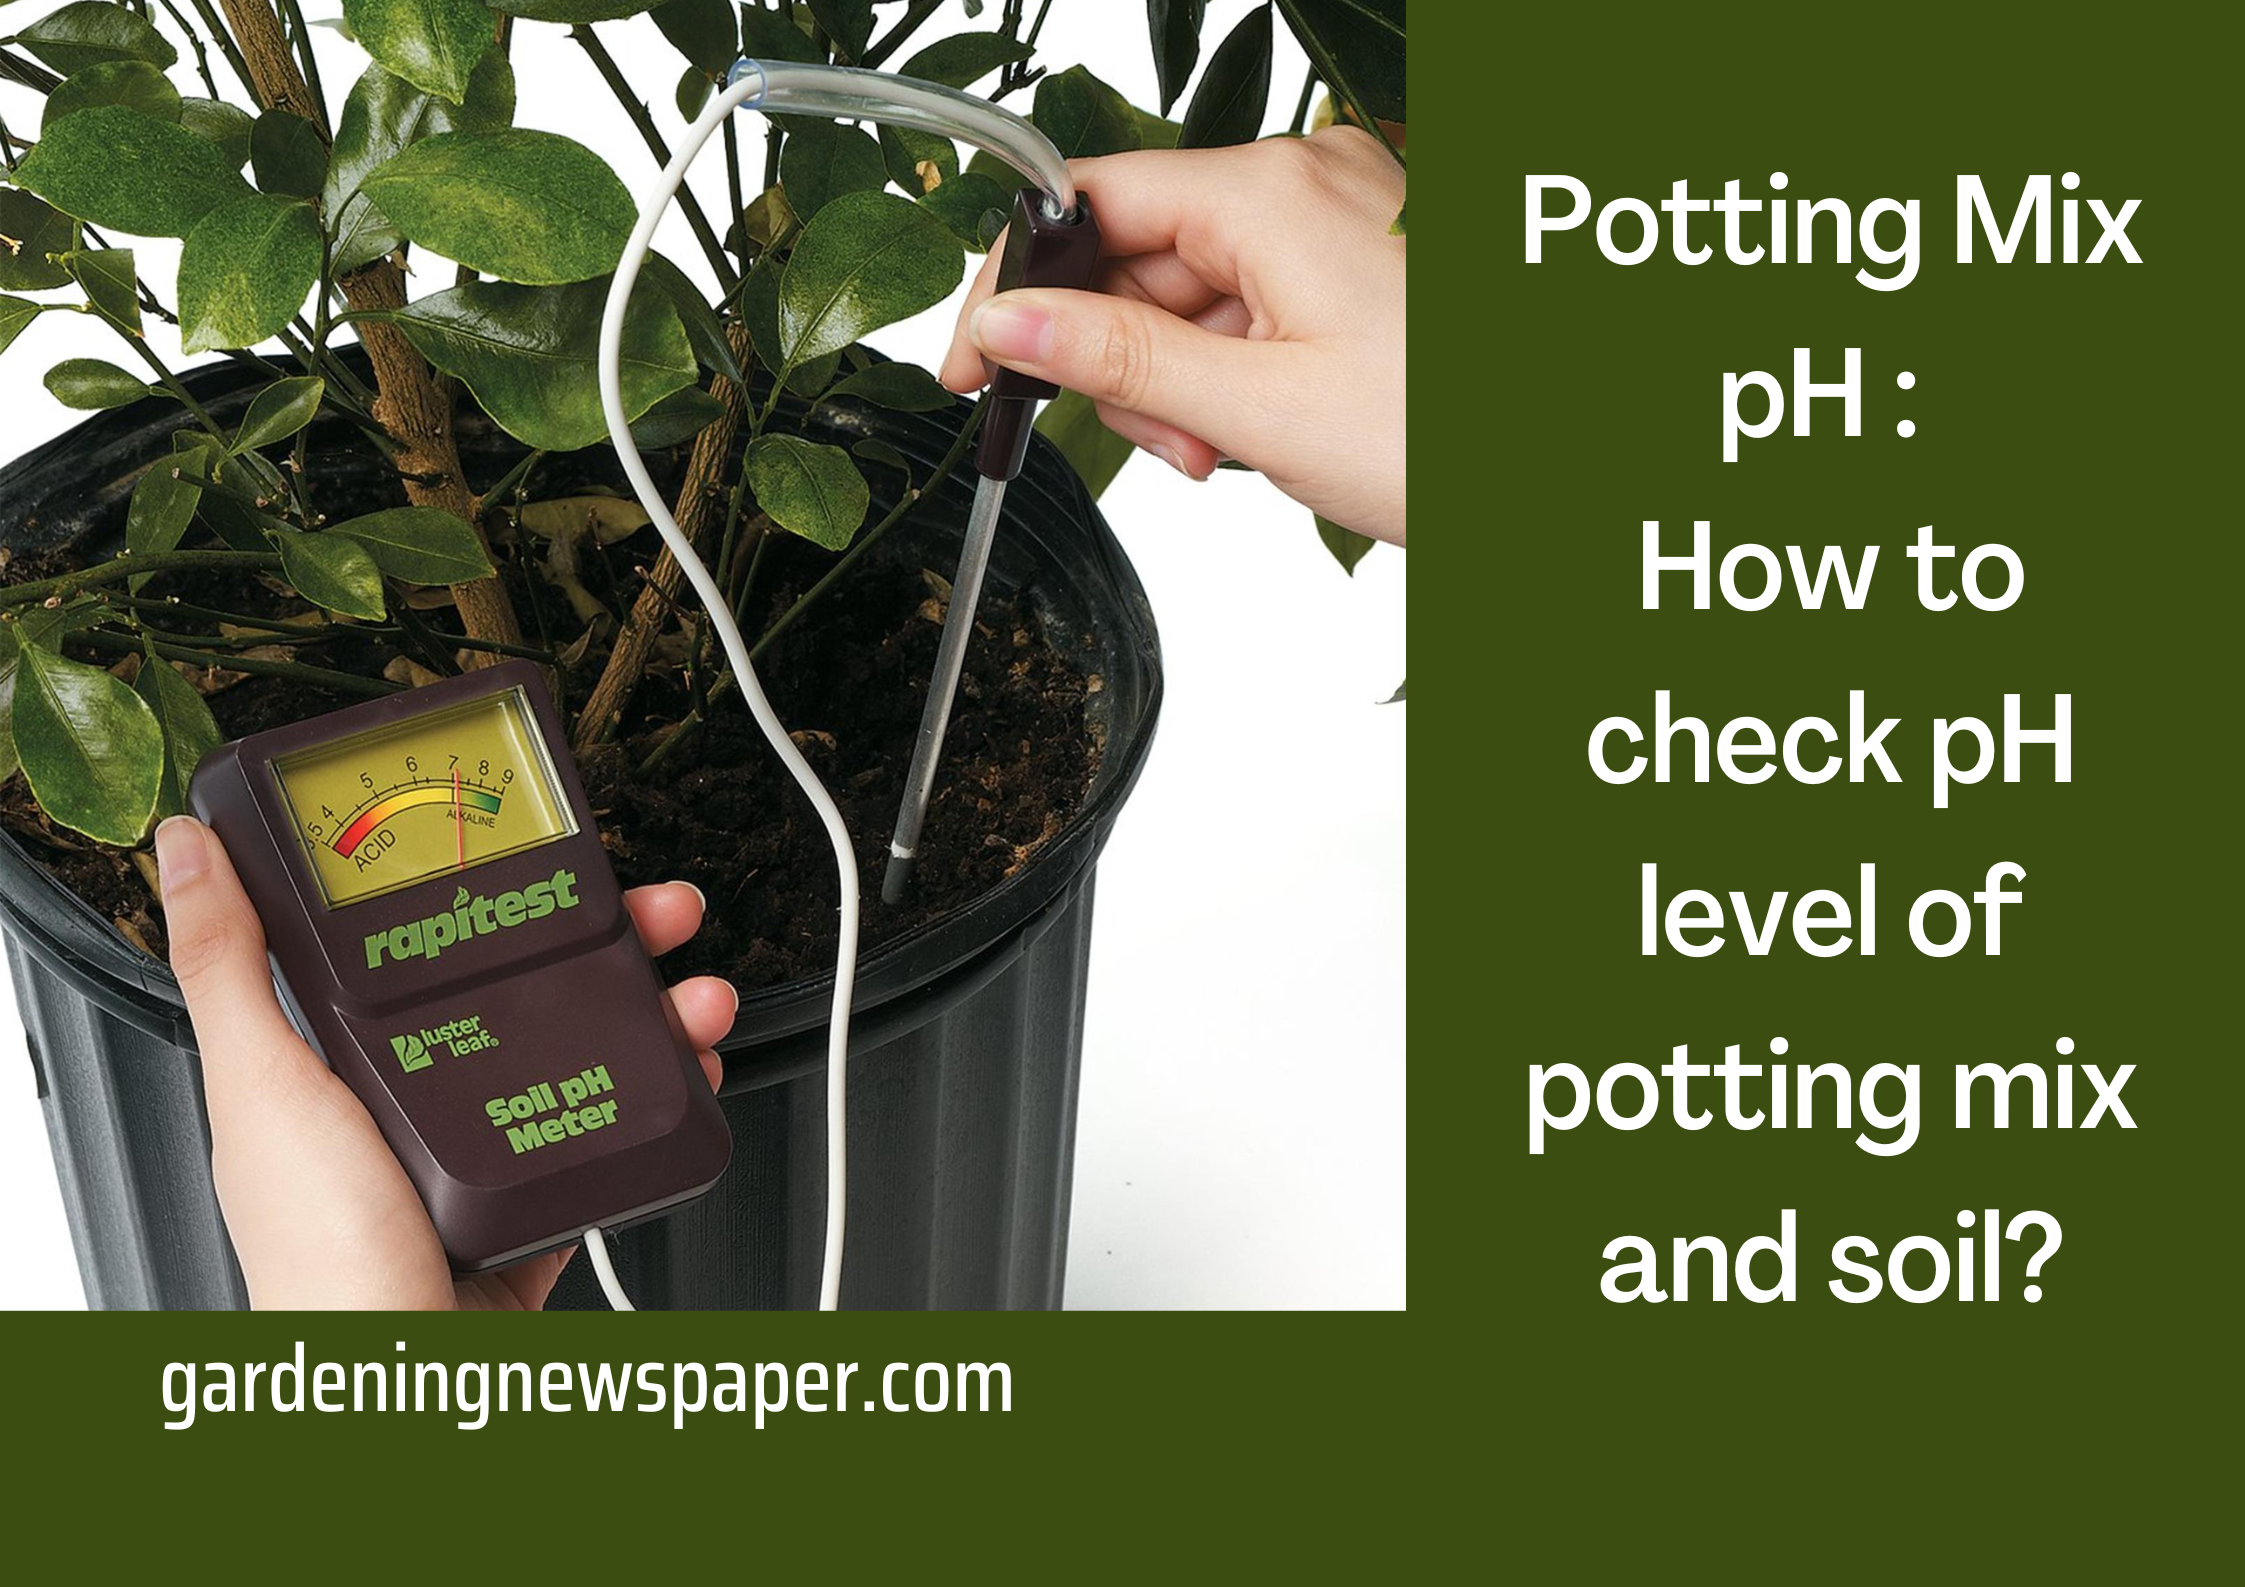 Potting mix PH - How to check pH level of Potting Soil?